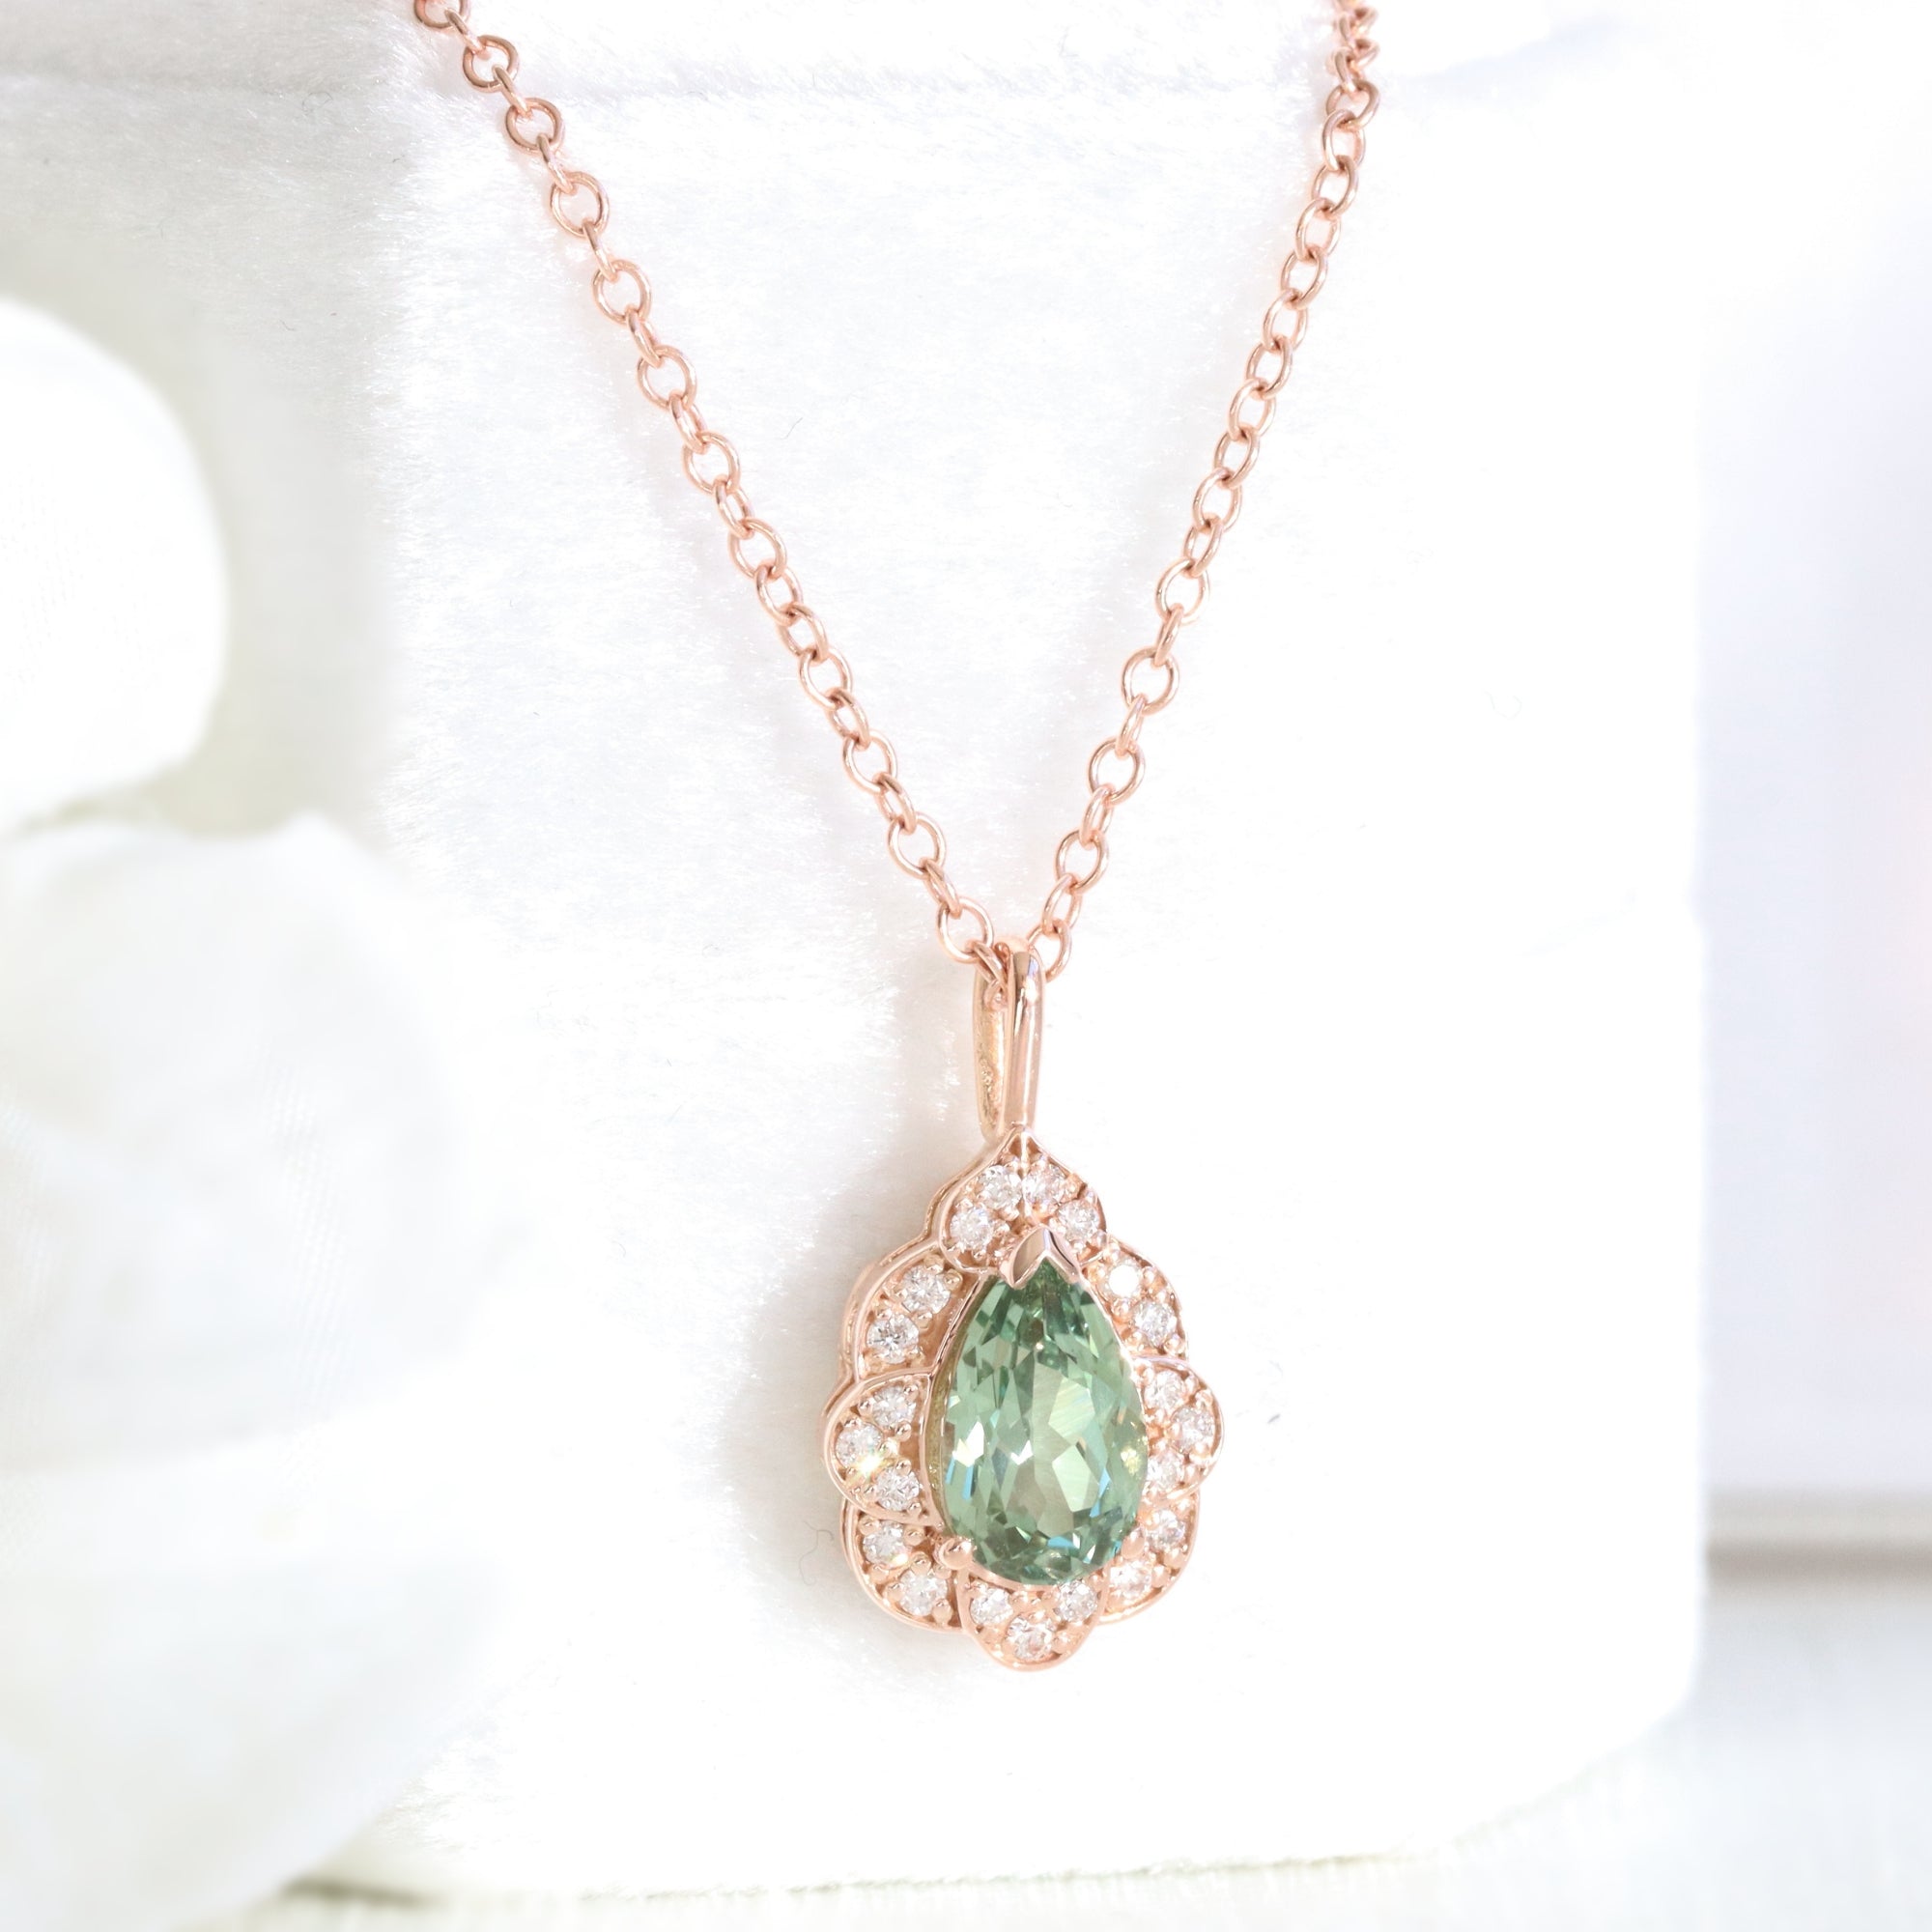 pear green sapphire necklace rose gold vintage style seafoam green sapphire diamond drop pendant necklace la more design jewelry